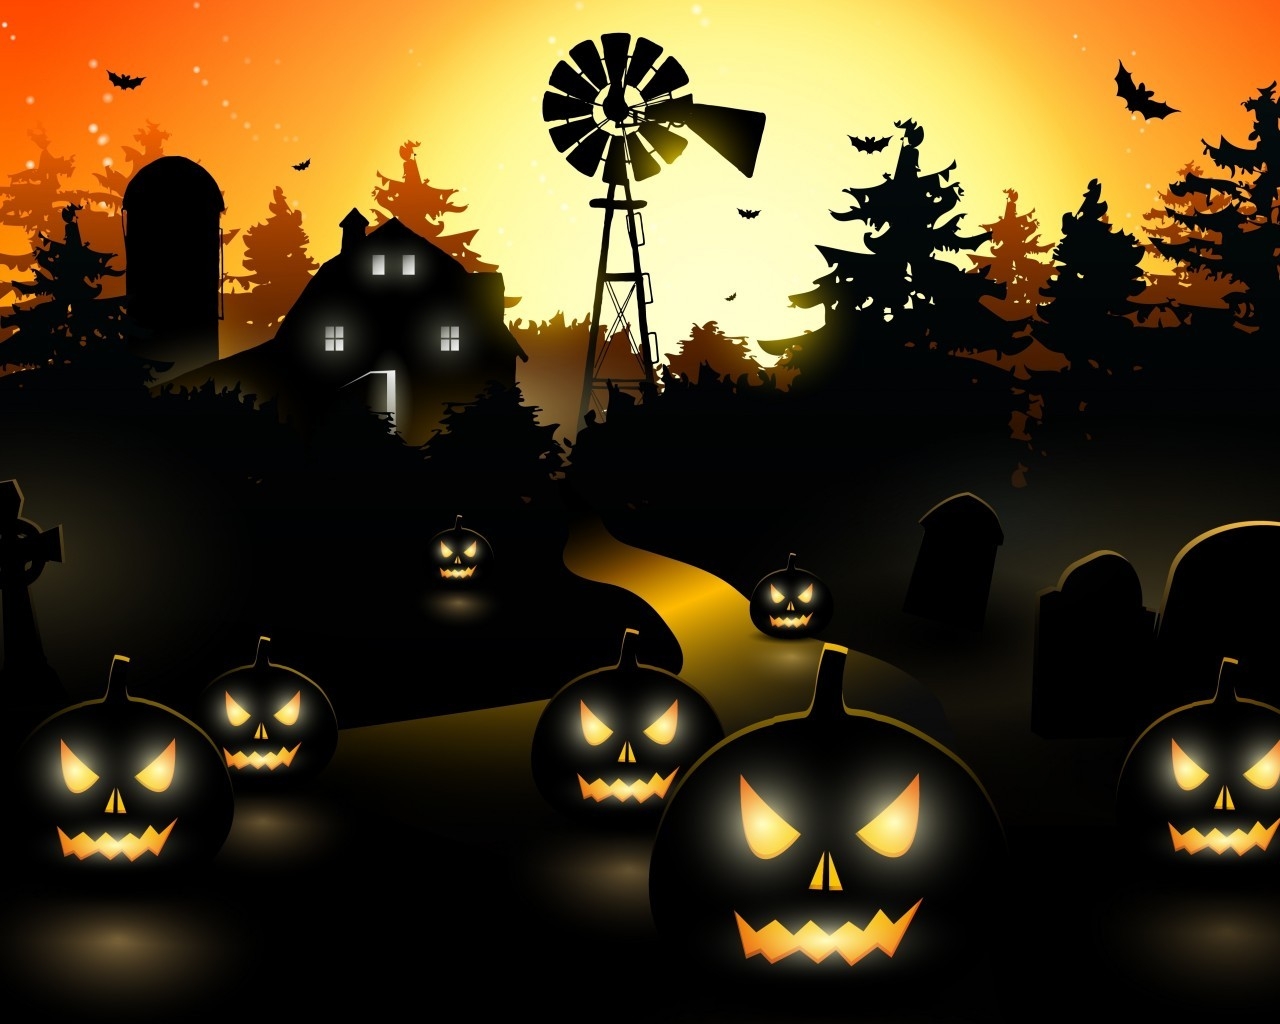 Halloween Black Pumpkins for 1280 x 1024 resolution